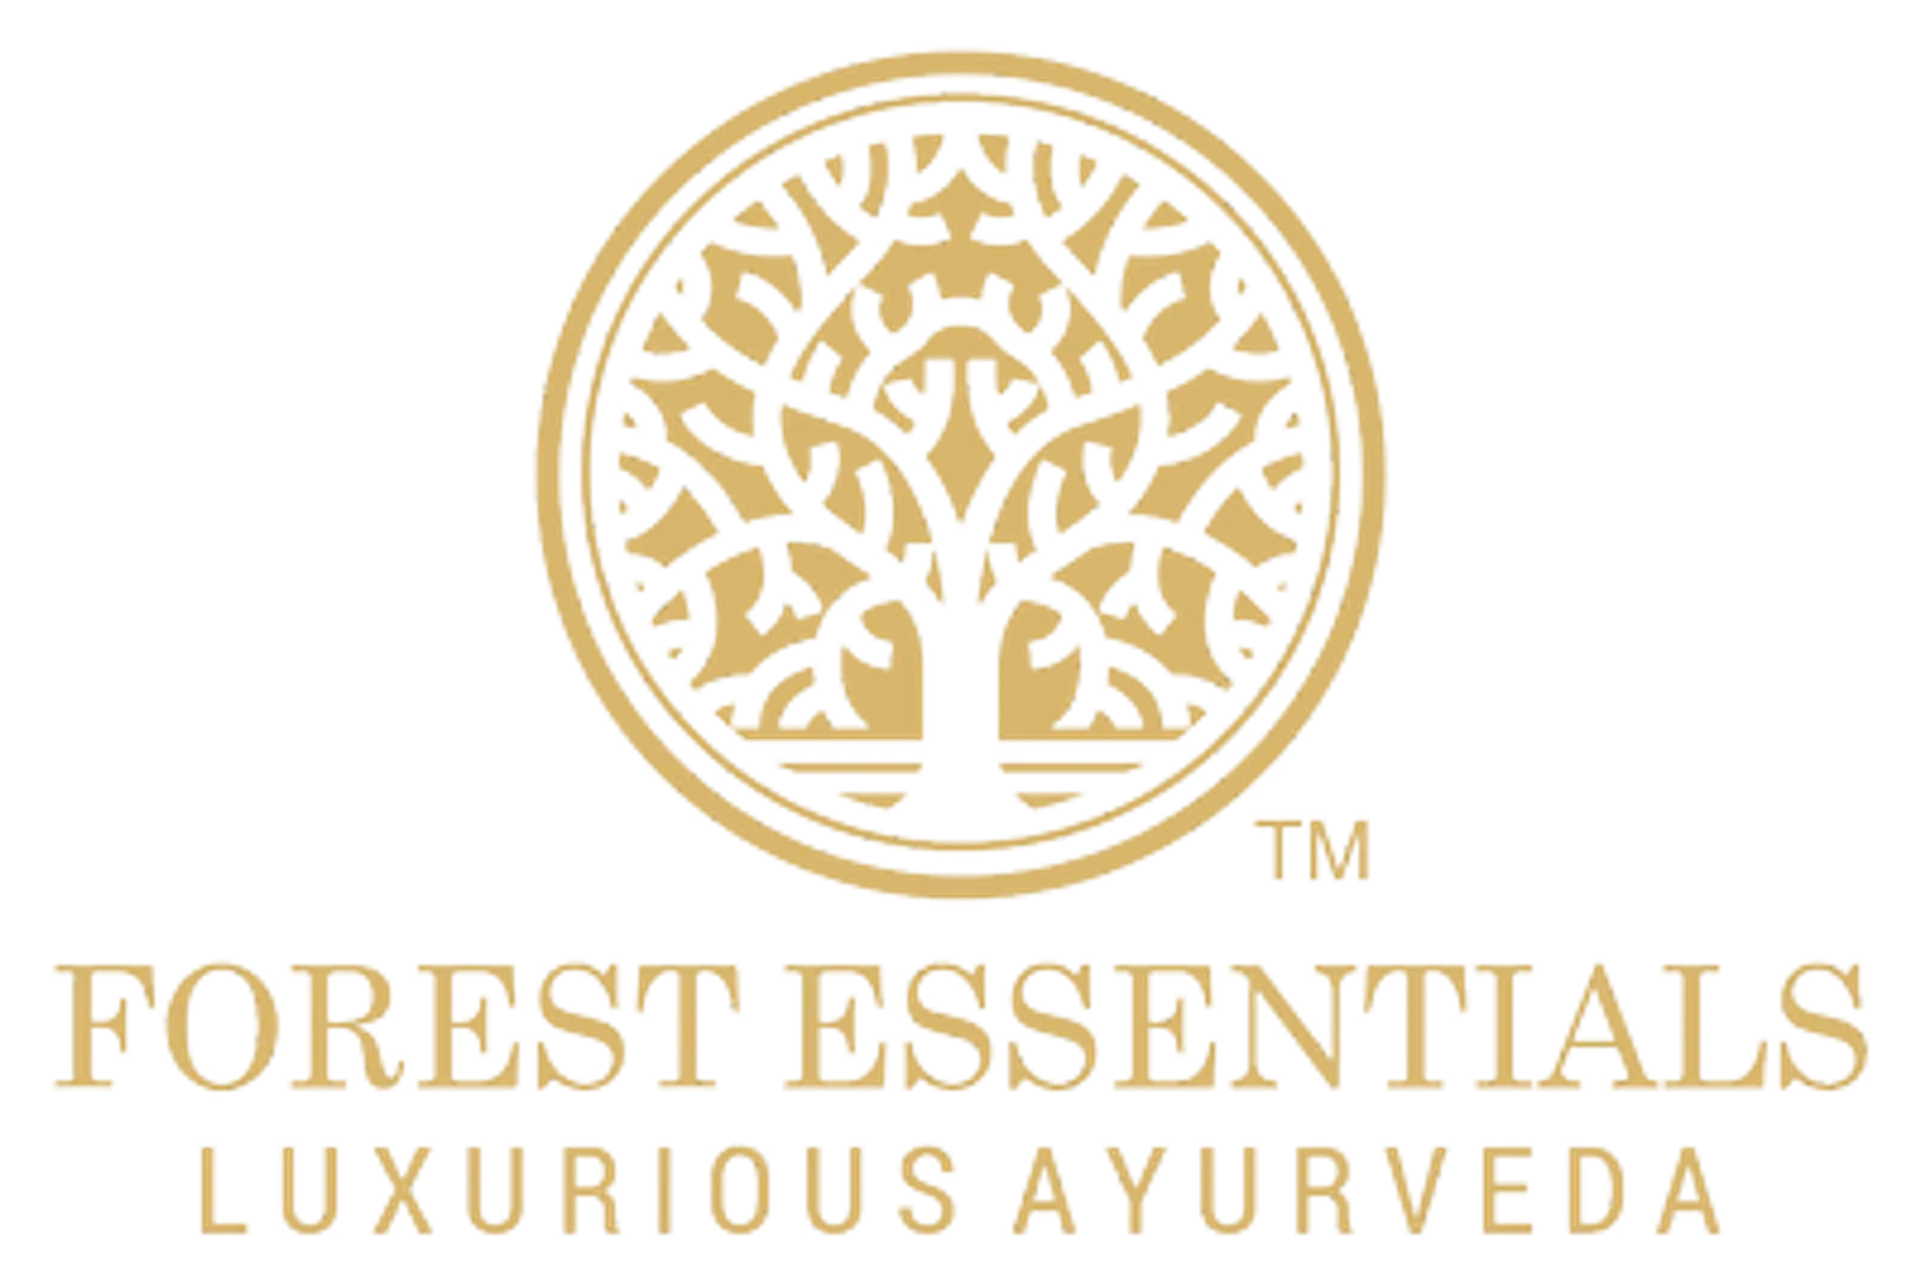 FOREST ESSENTIALS logo. Current catalogue